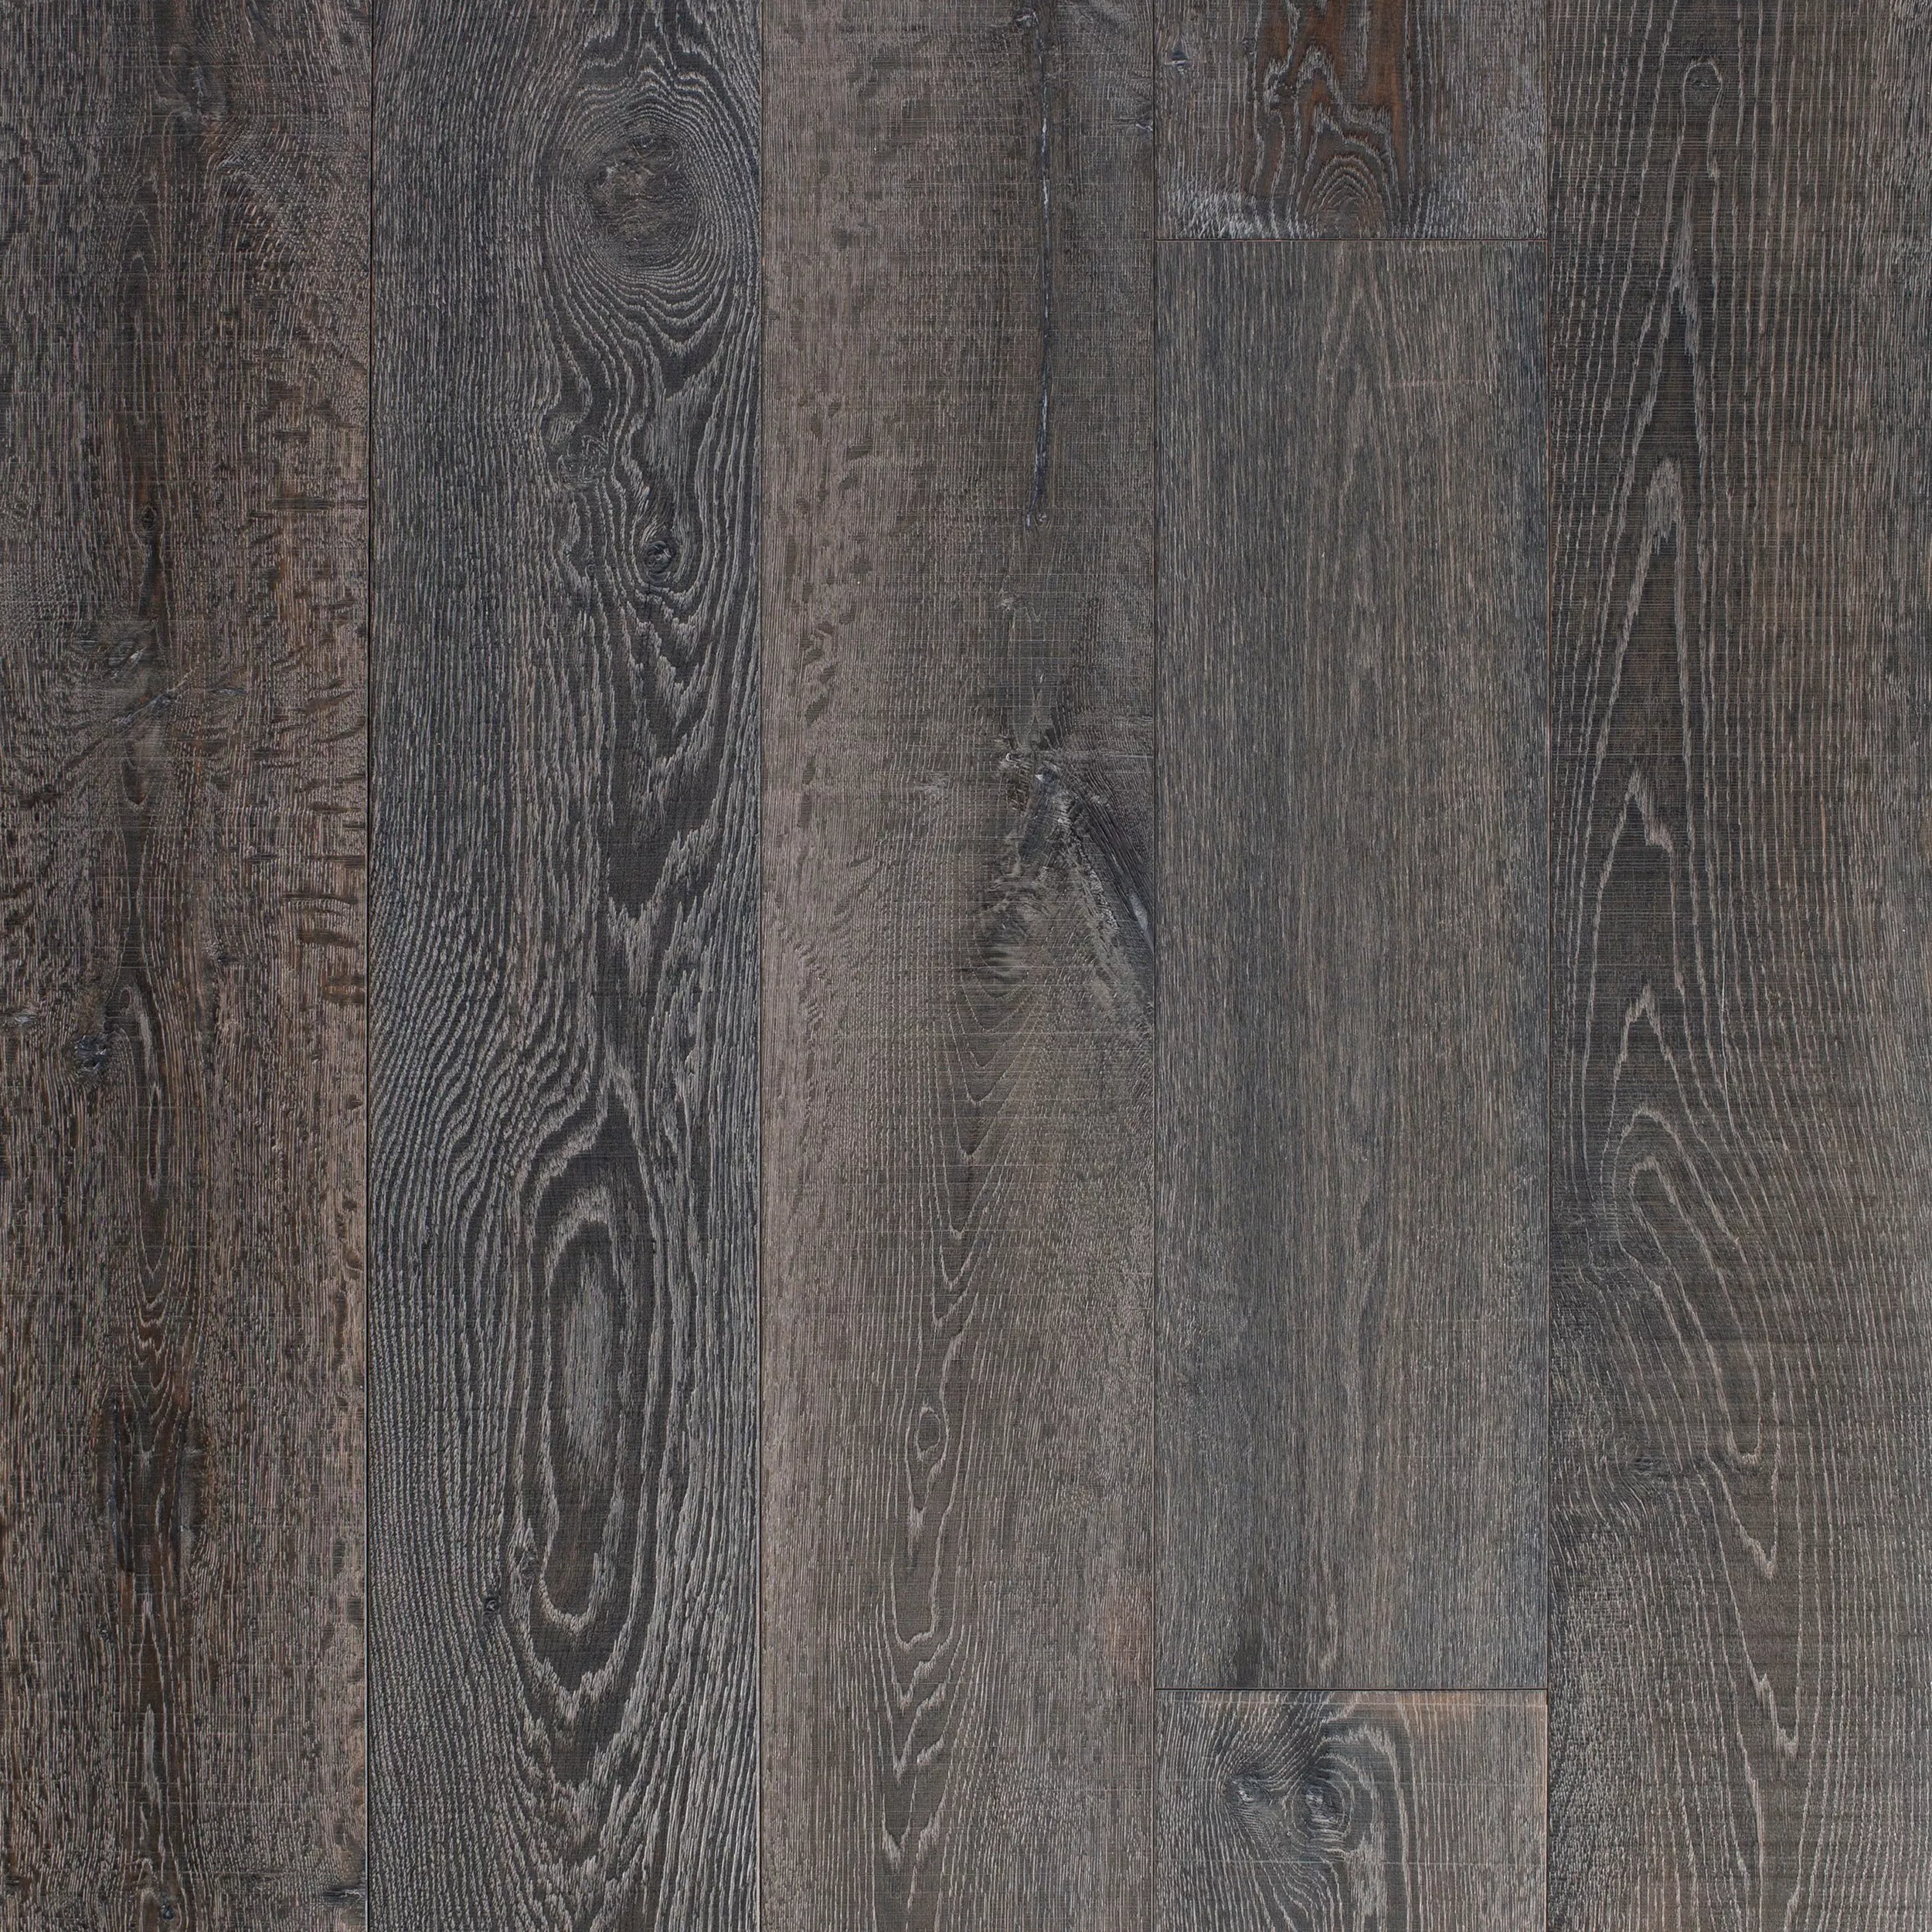 Ludres White Oak Distressed Engineered Hardwood